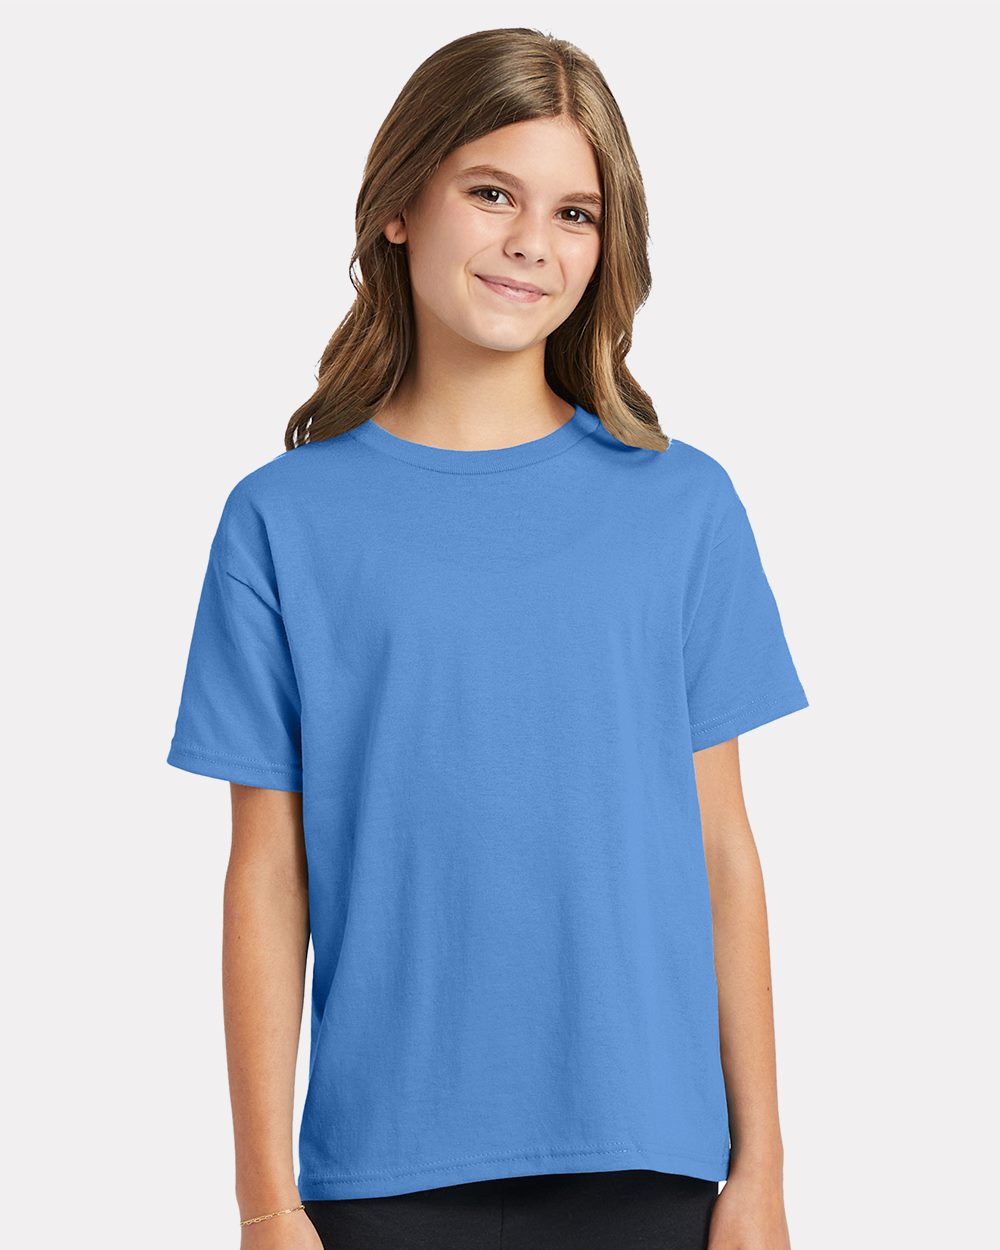 Hanes Ecosmart Youth T-Shirt 5370 XS-XL 